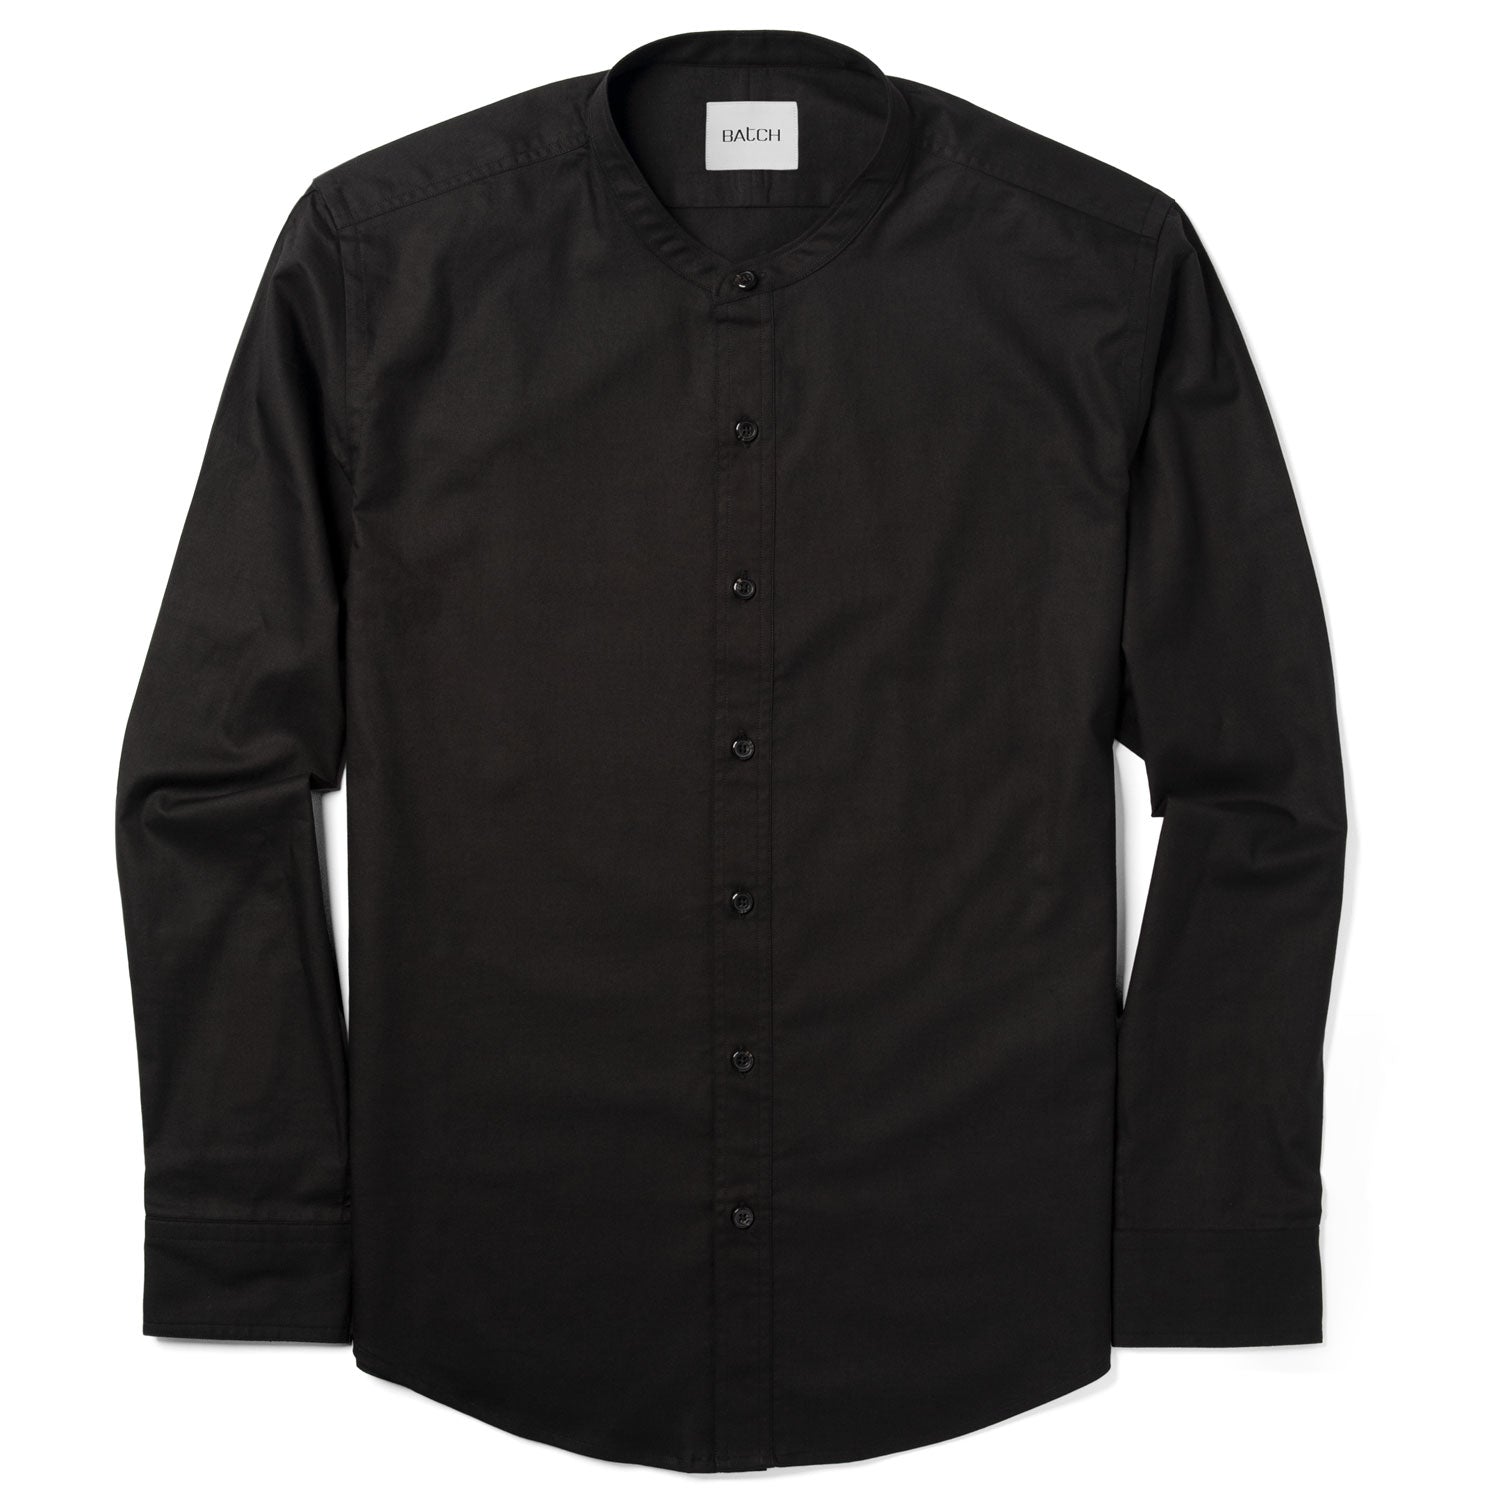 men’s dress shirt with black buttons